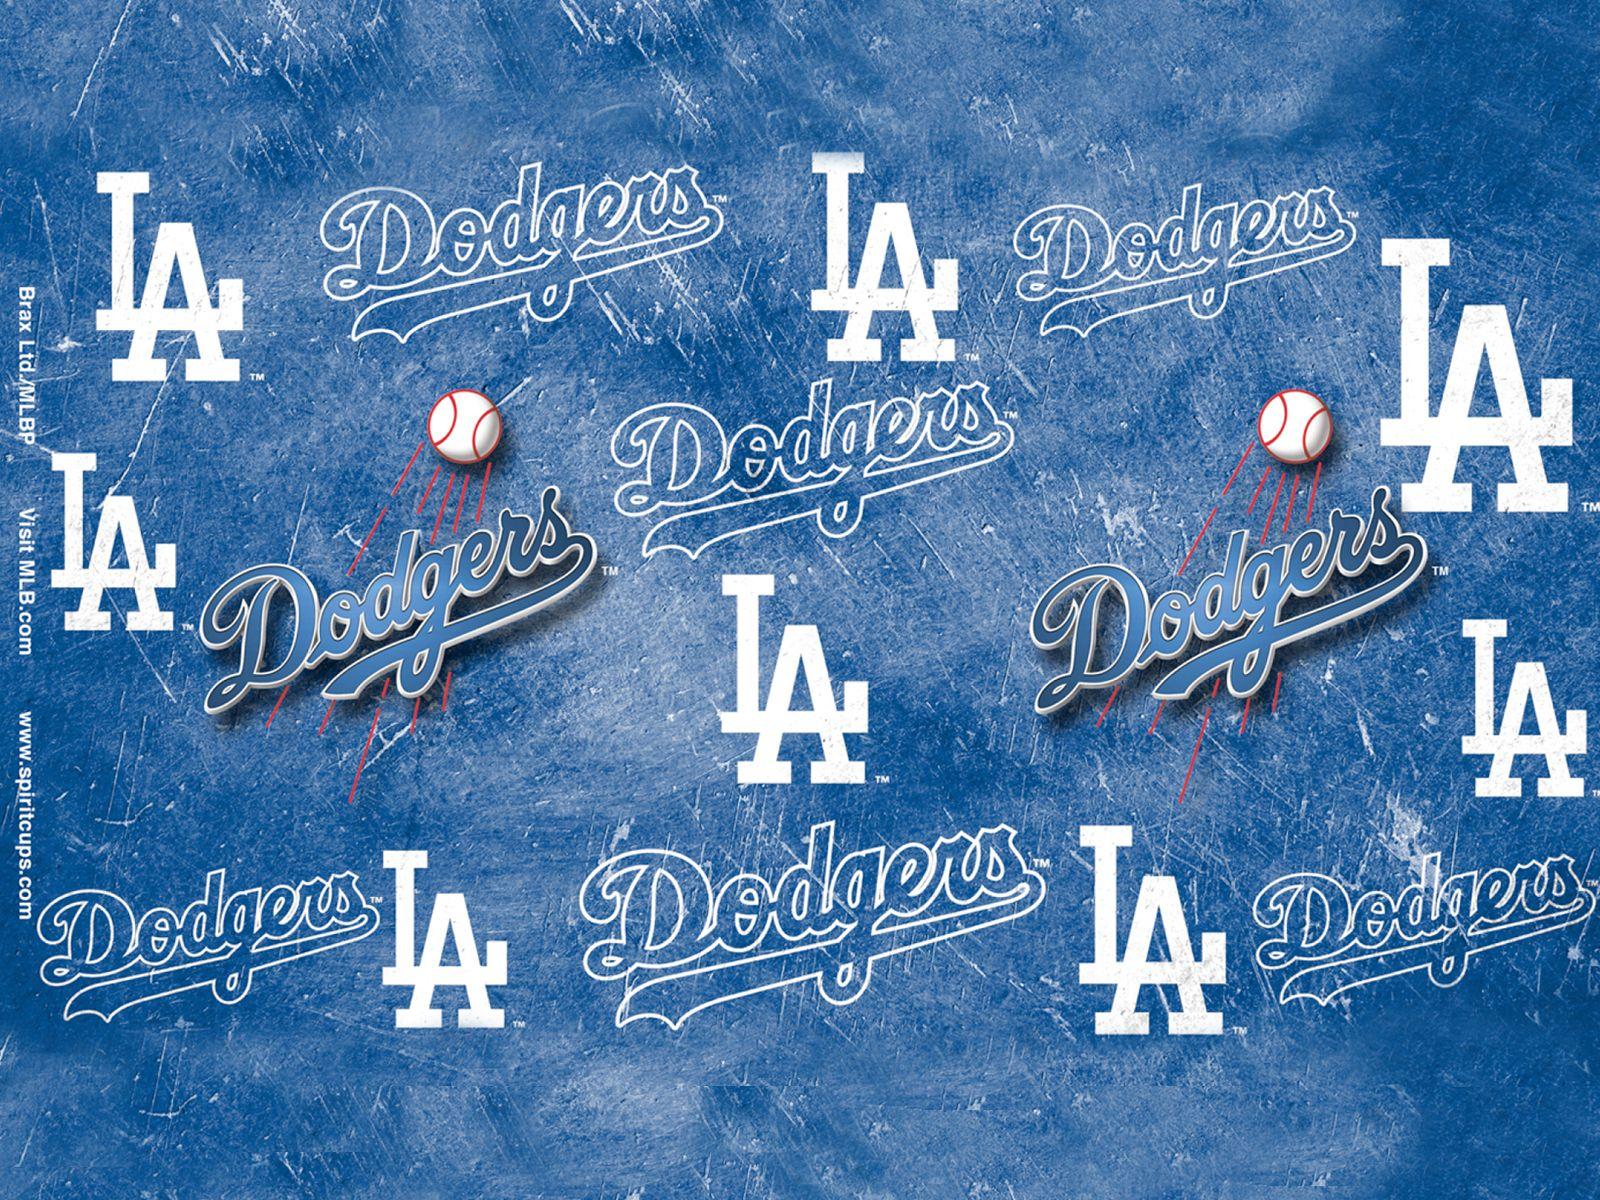 Cool Dodgers Wallpapers - Wallpaper Cave